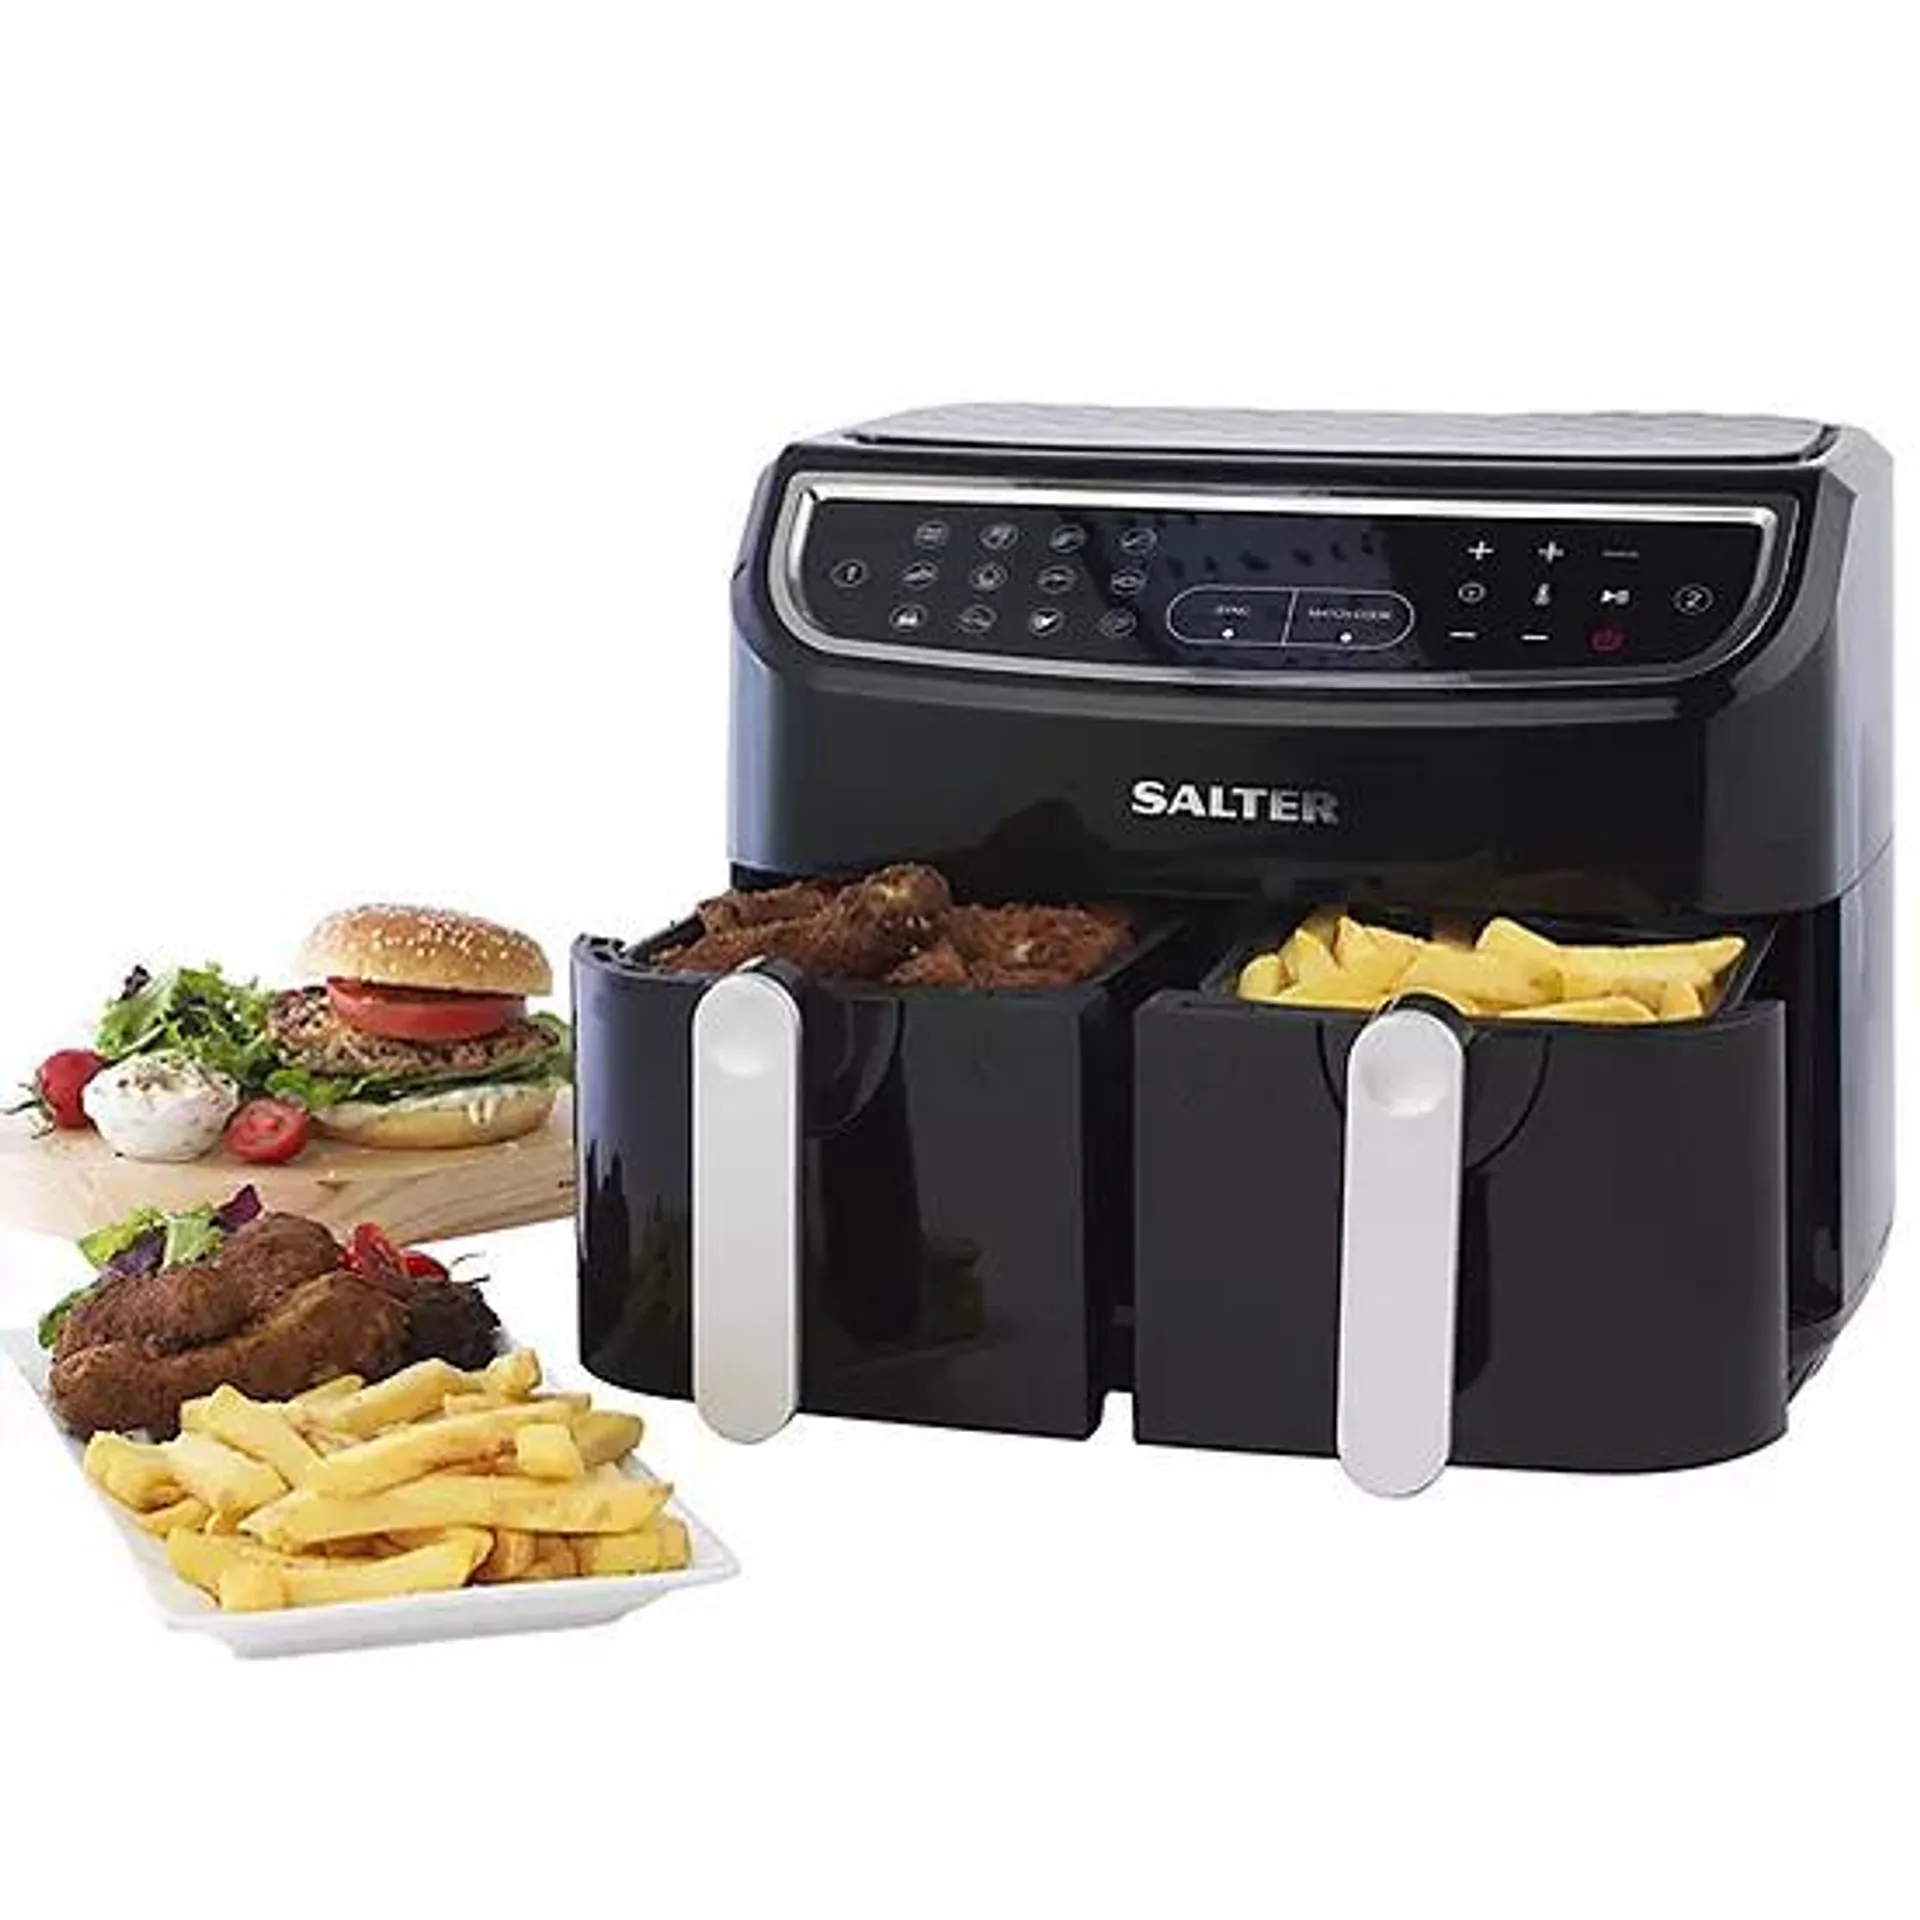 Salter Dual Cook Pro EK4548 8.2L Air Fryer With 12 Cooking Functions